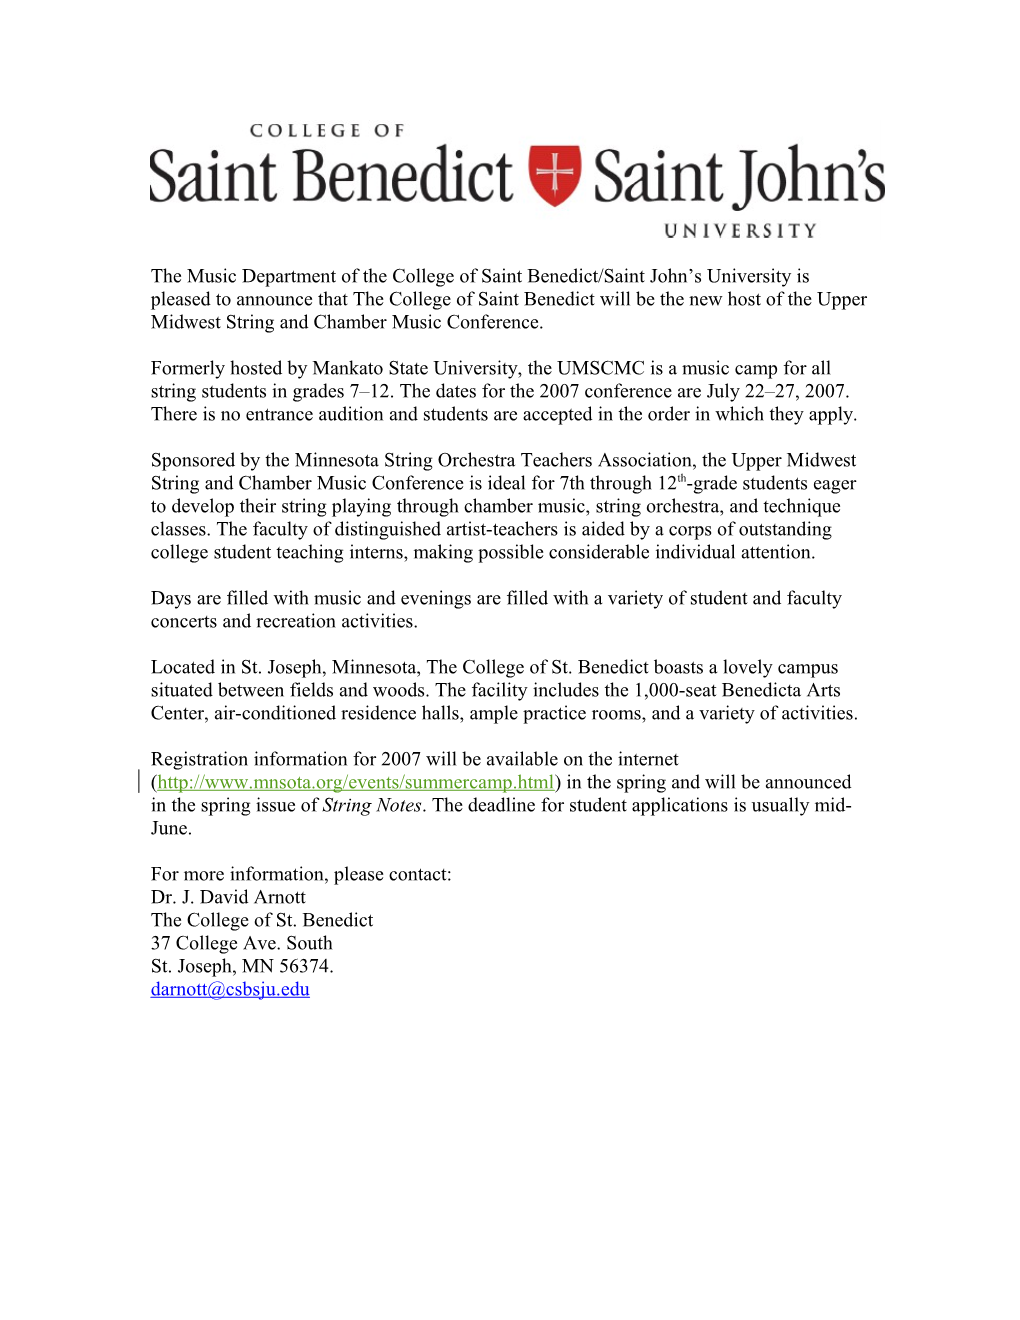 The Music Department of the College of Saint Benedict/Saint John S University Is Pleased